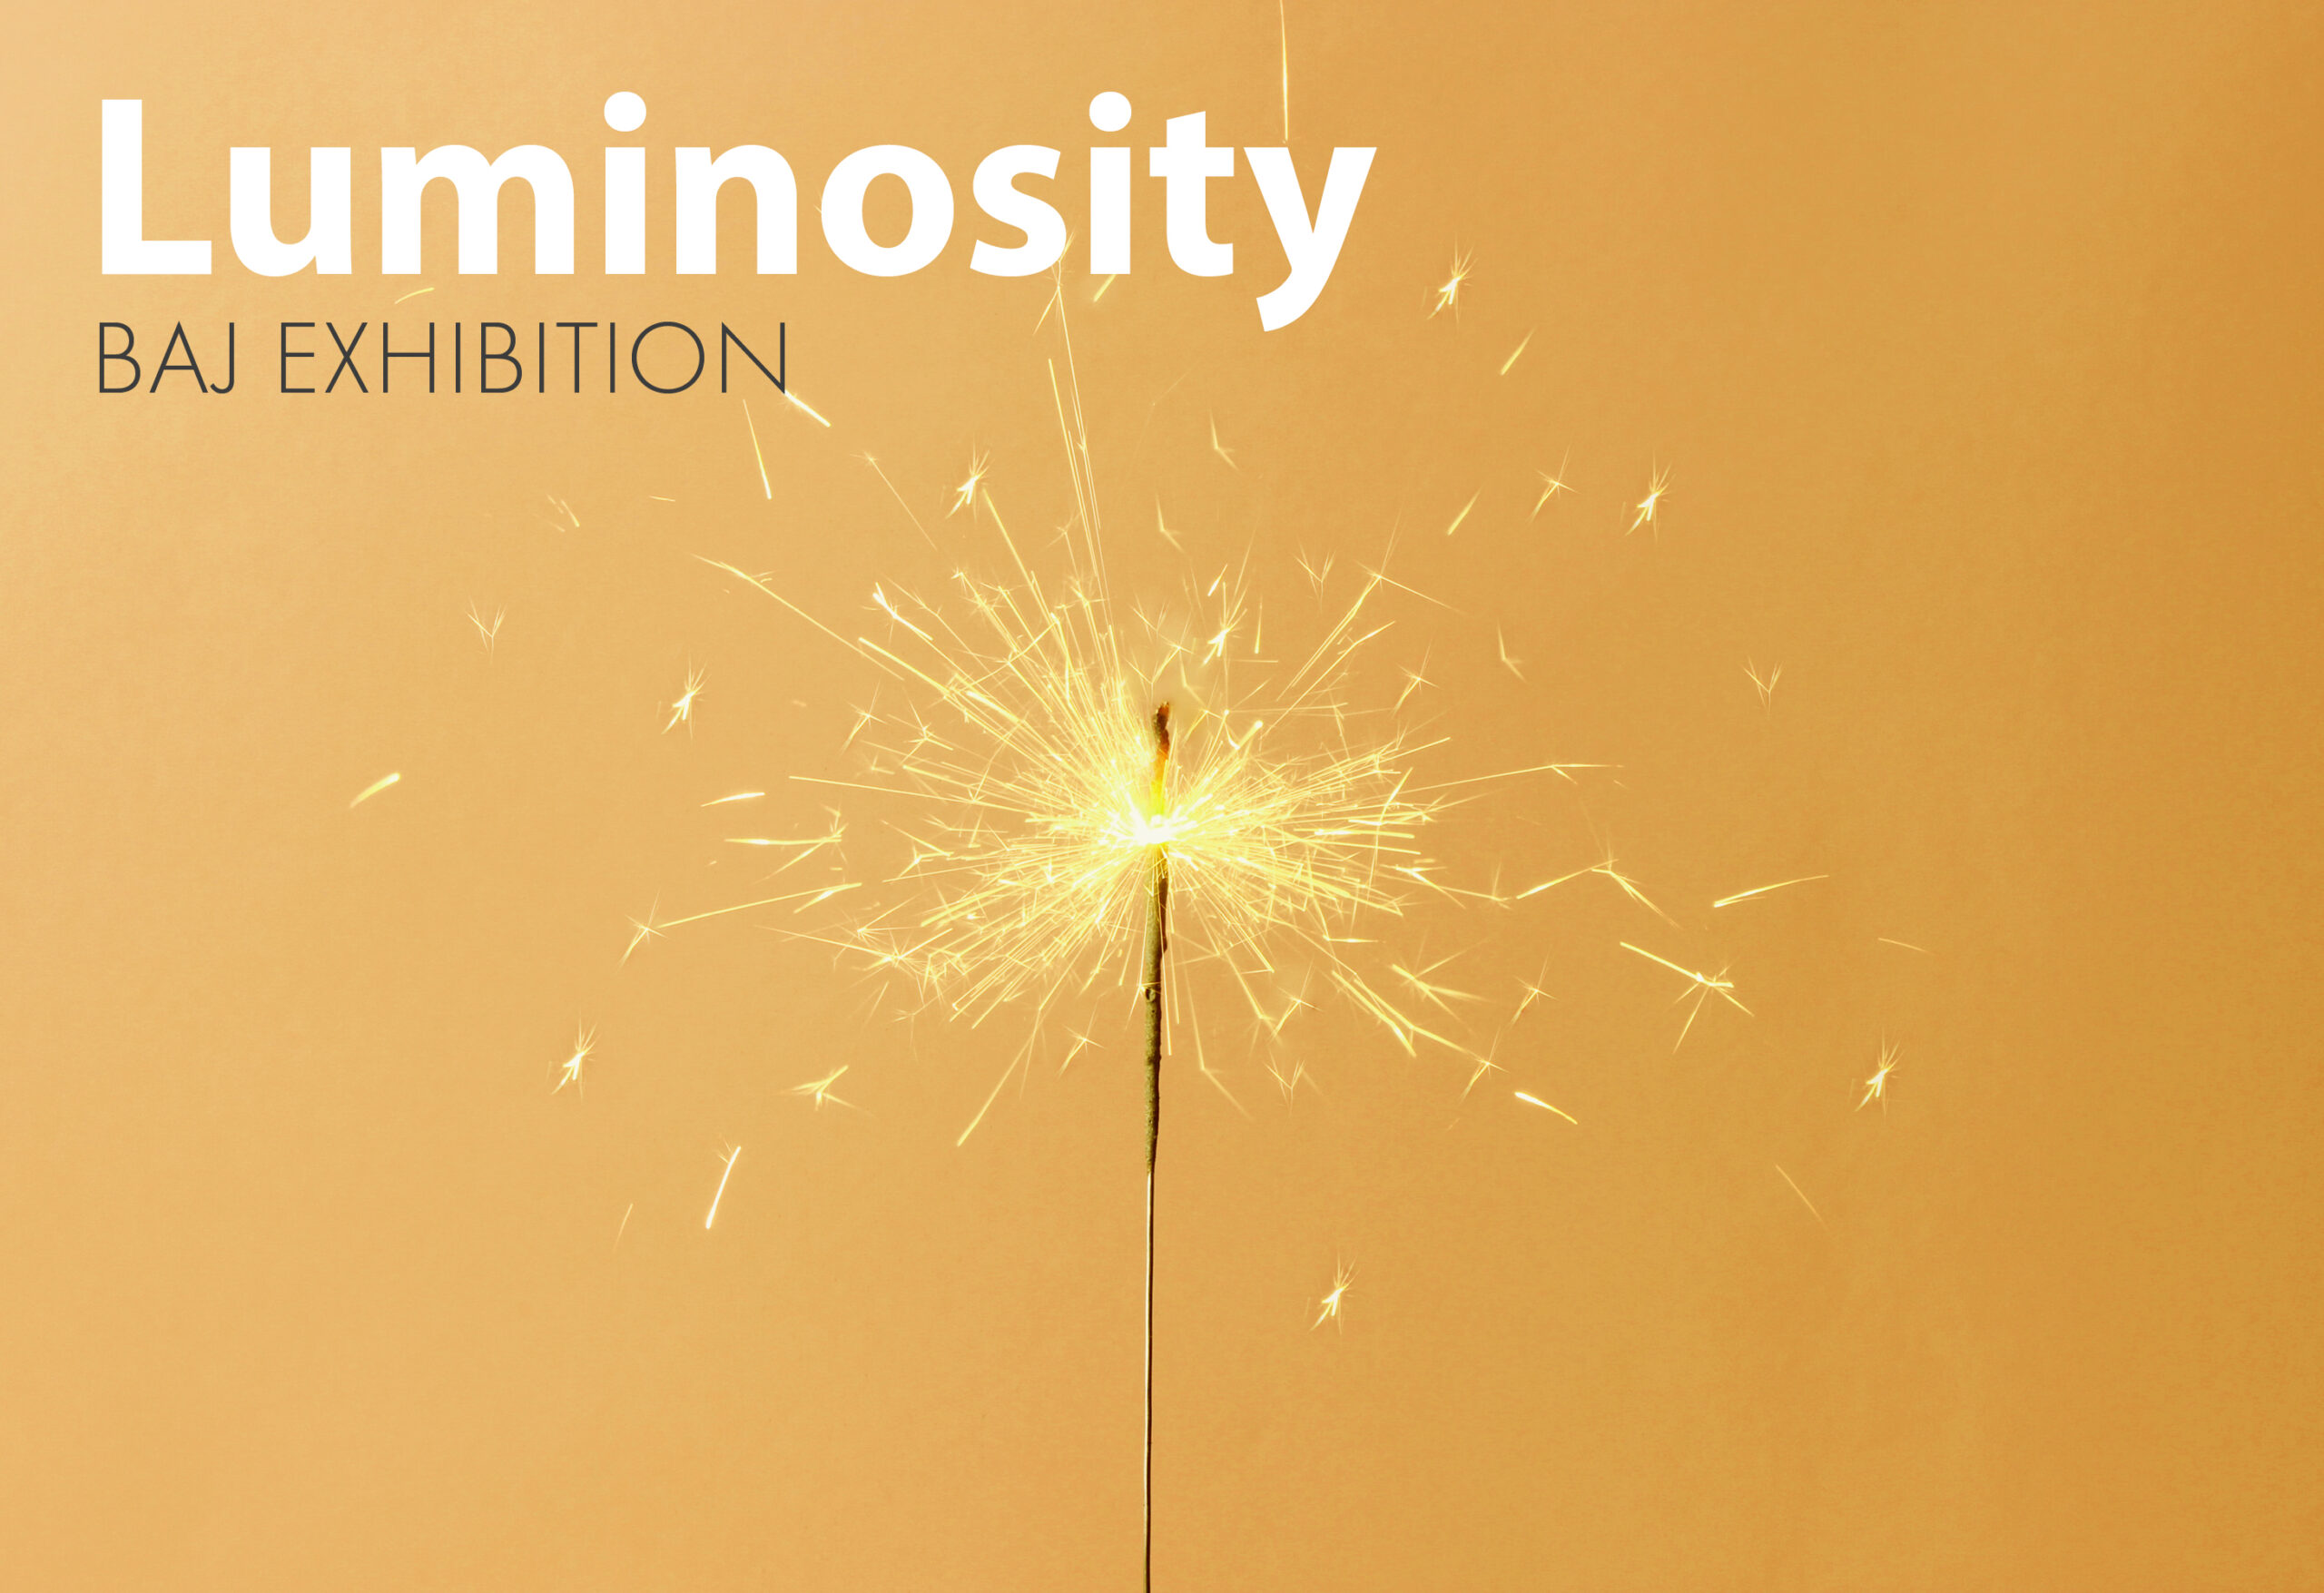 Luminosity exhibition banner image with alight sparkler